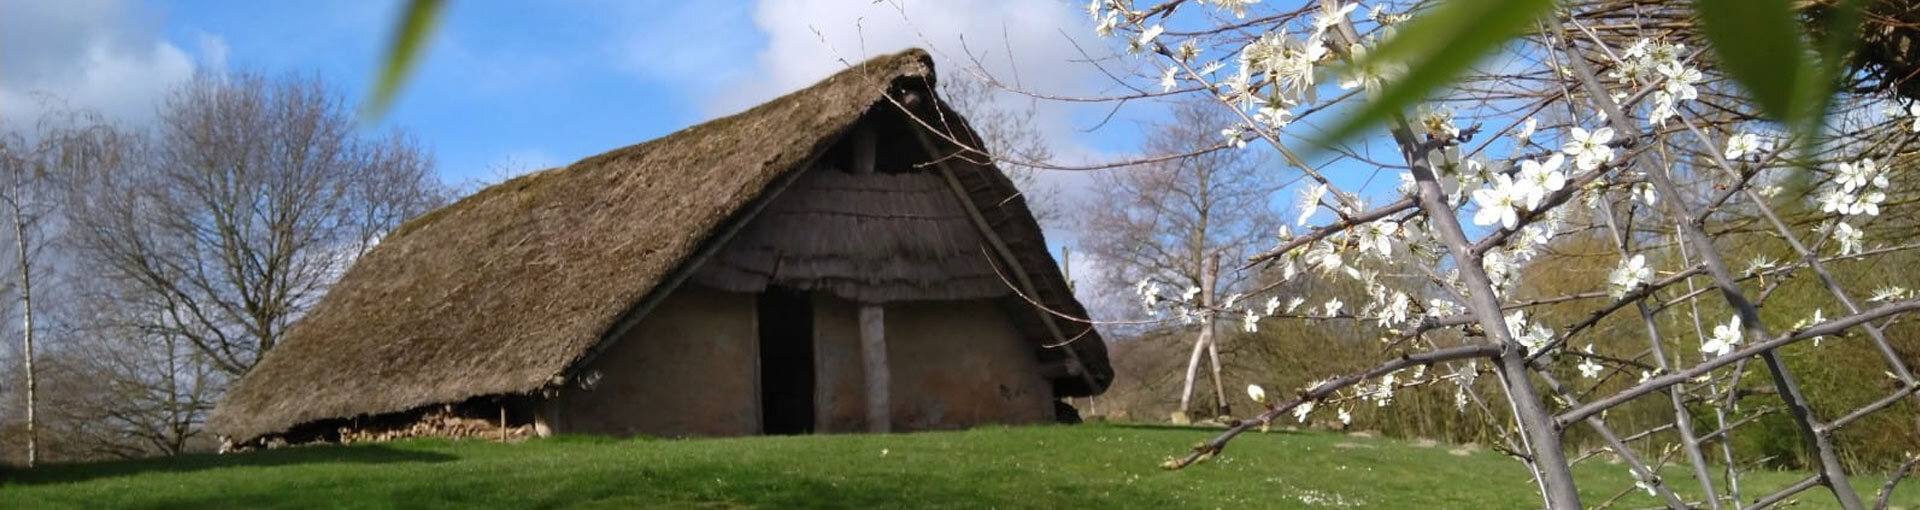 huis in archeologisch openlucht museum swifterkamp